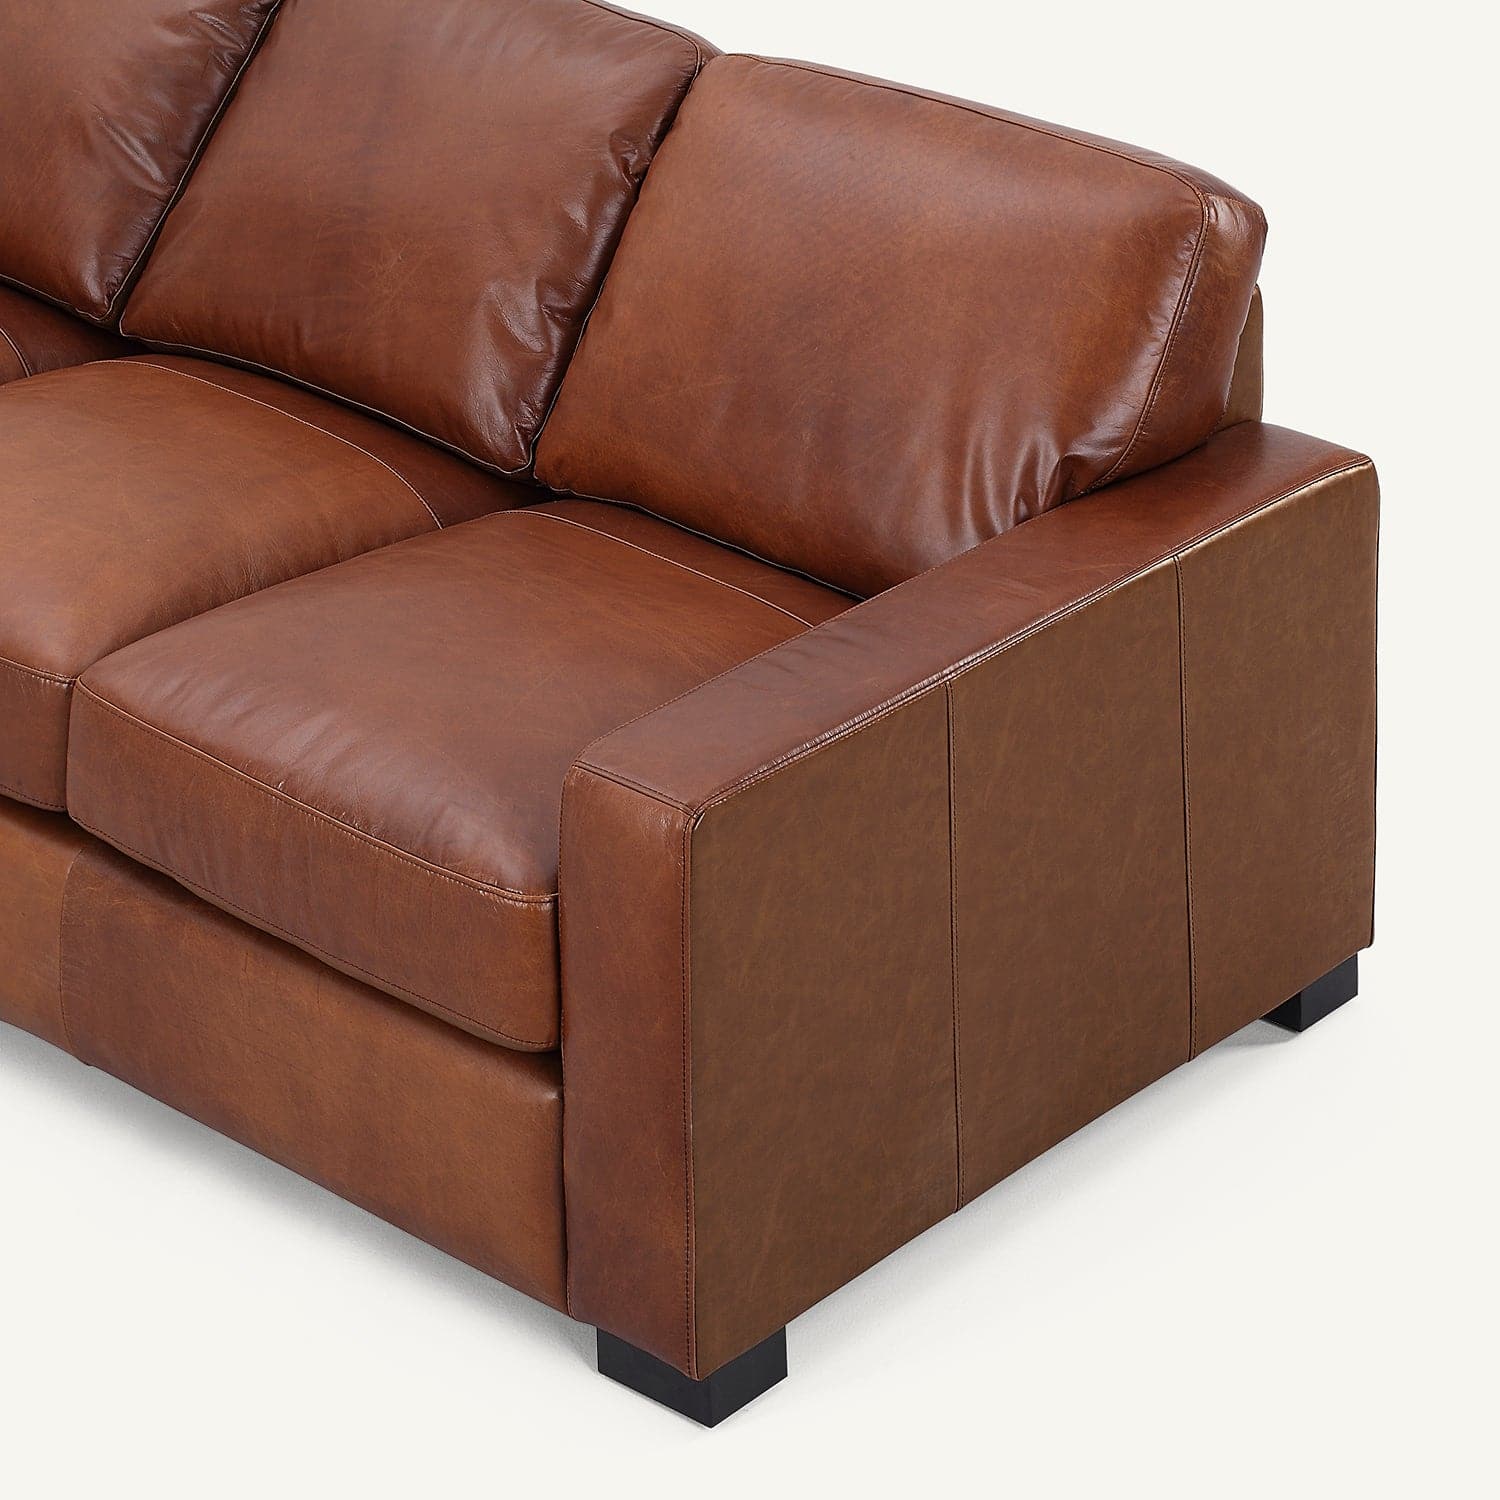 Randall Chestnut Brown Oil Wax Leather Sofa Set